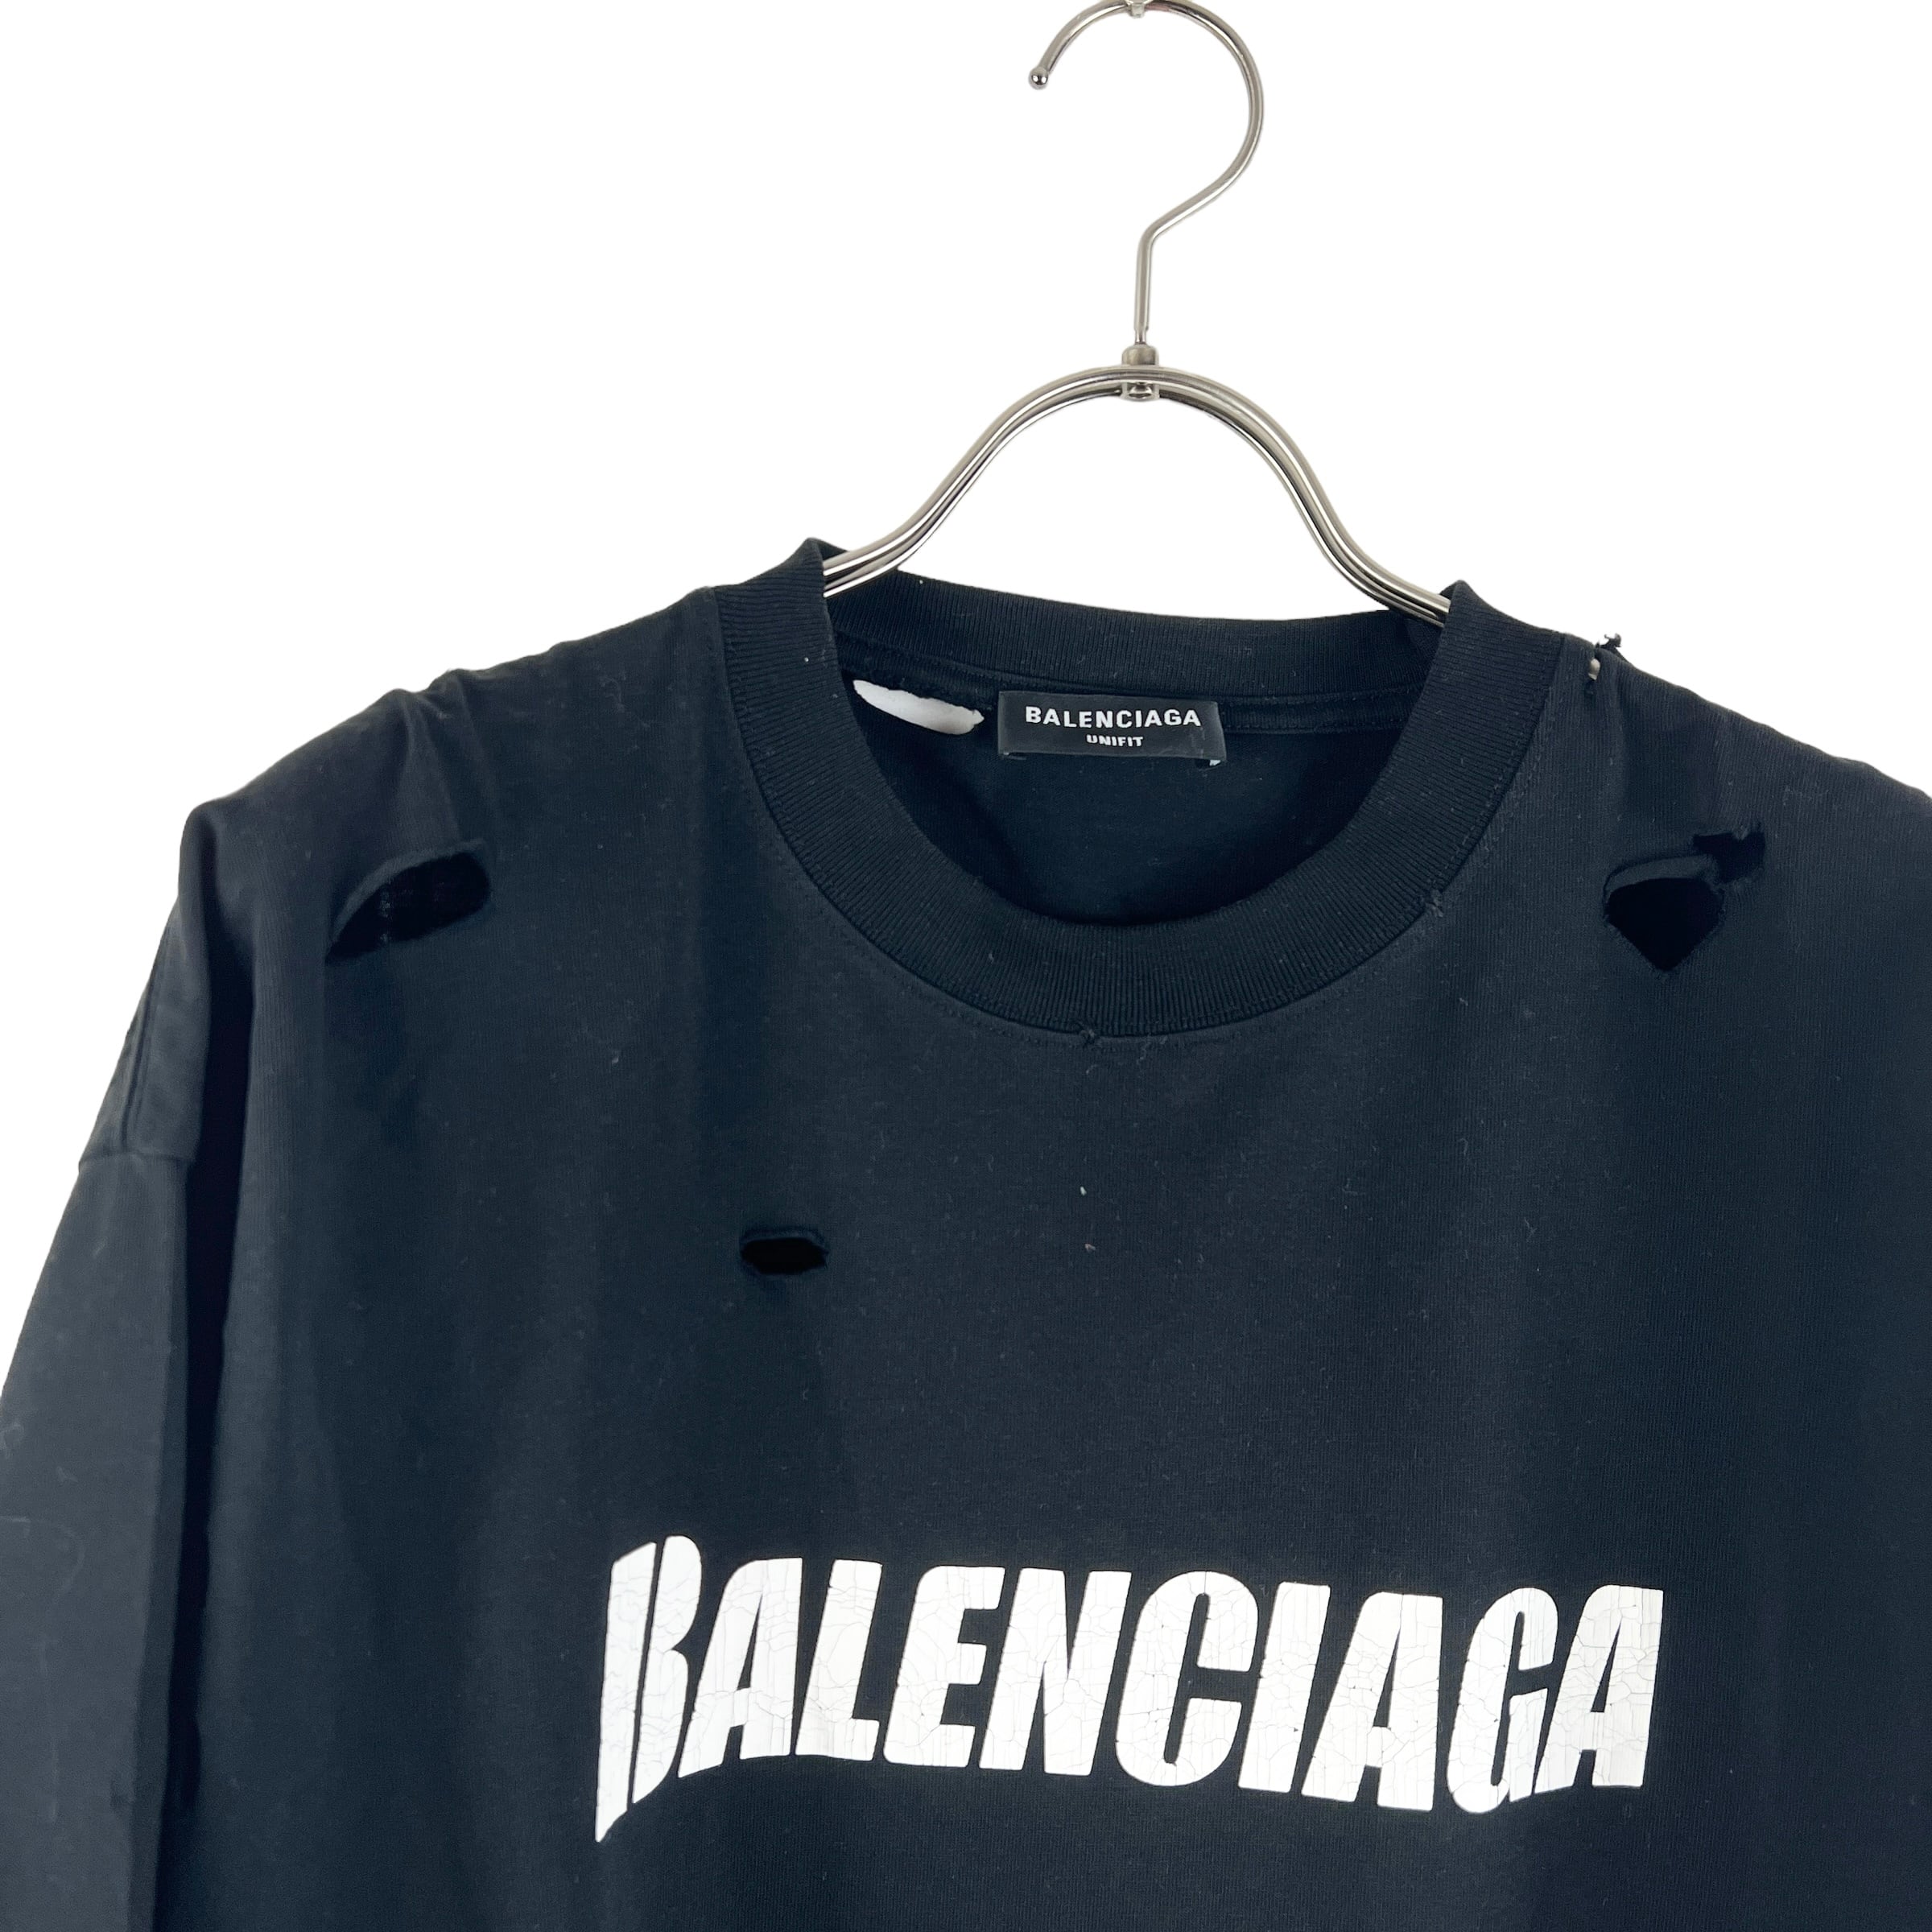 Balenciaga(バレンシアガ) Damage Design Shortsleeve T Shirt (black 